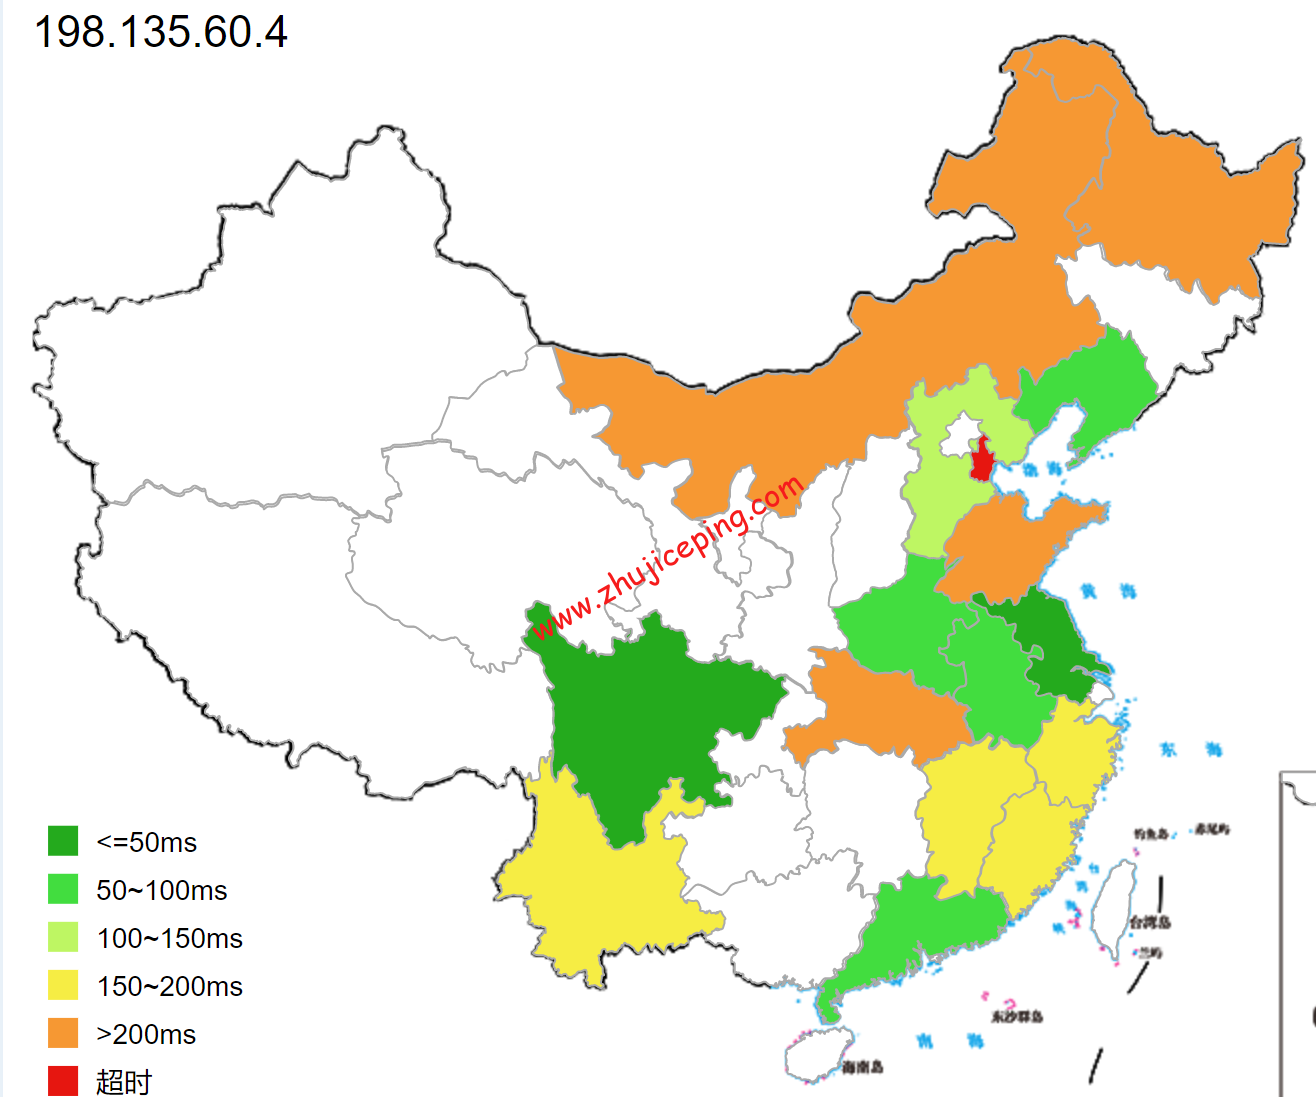 spinservers中国电信网络版服务器测评：三网往返全直连